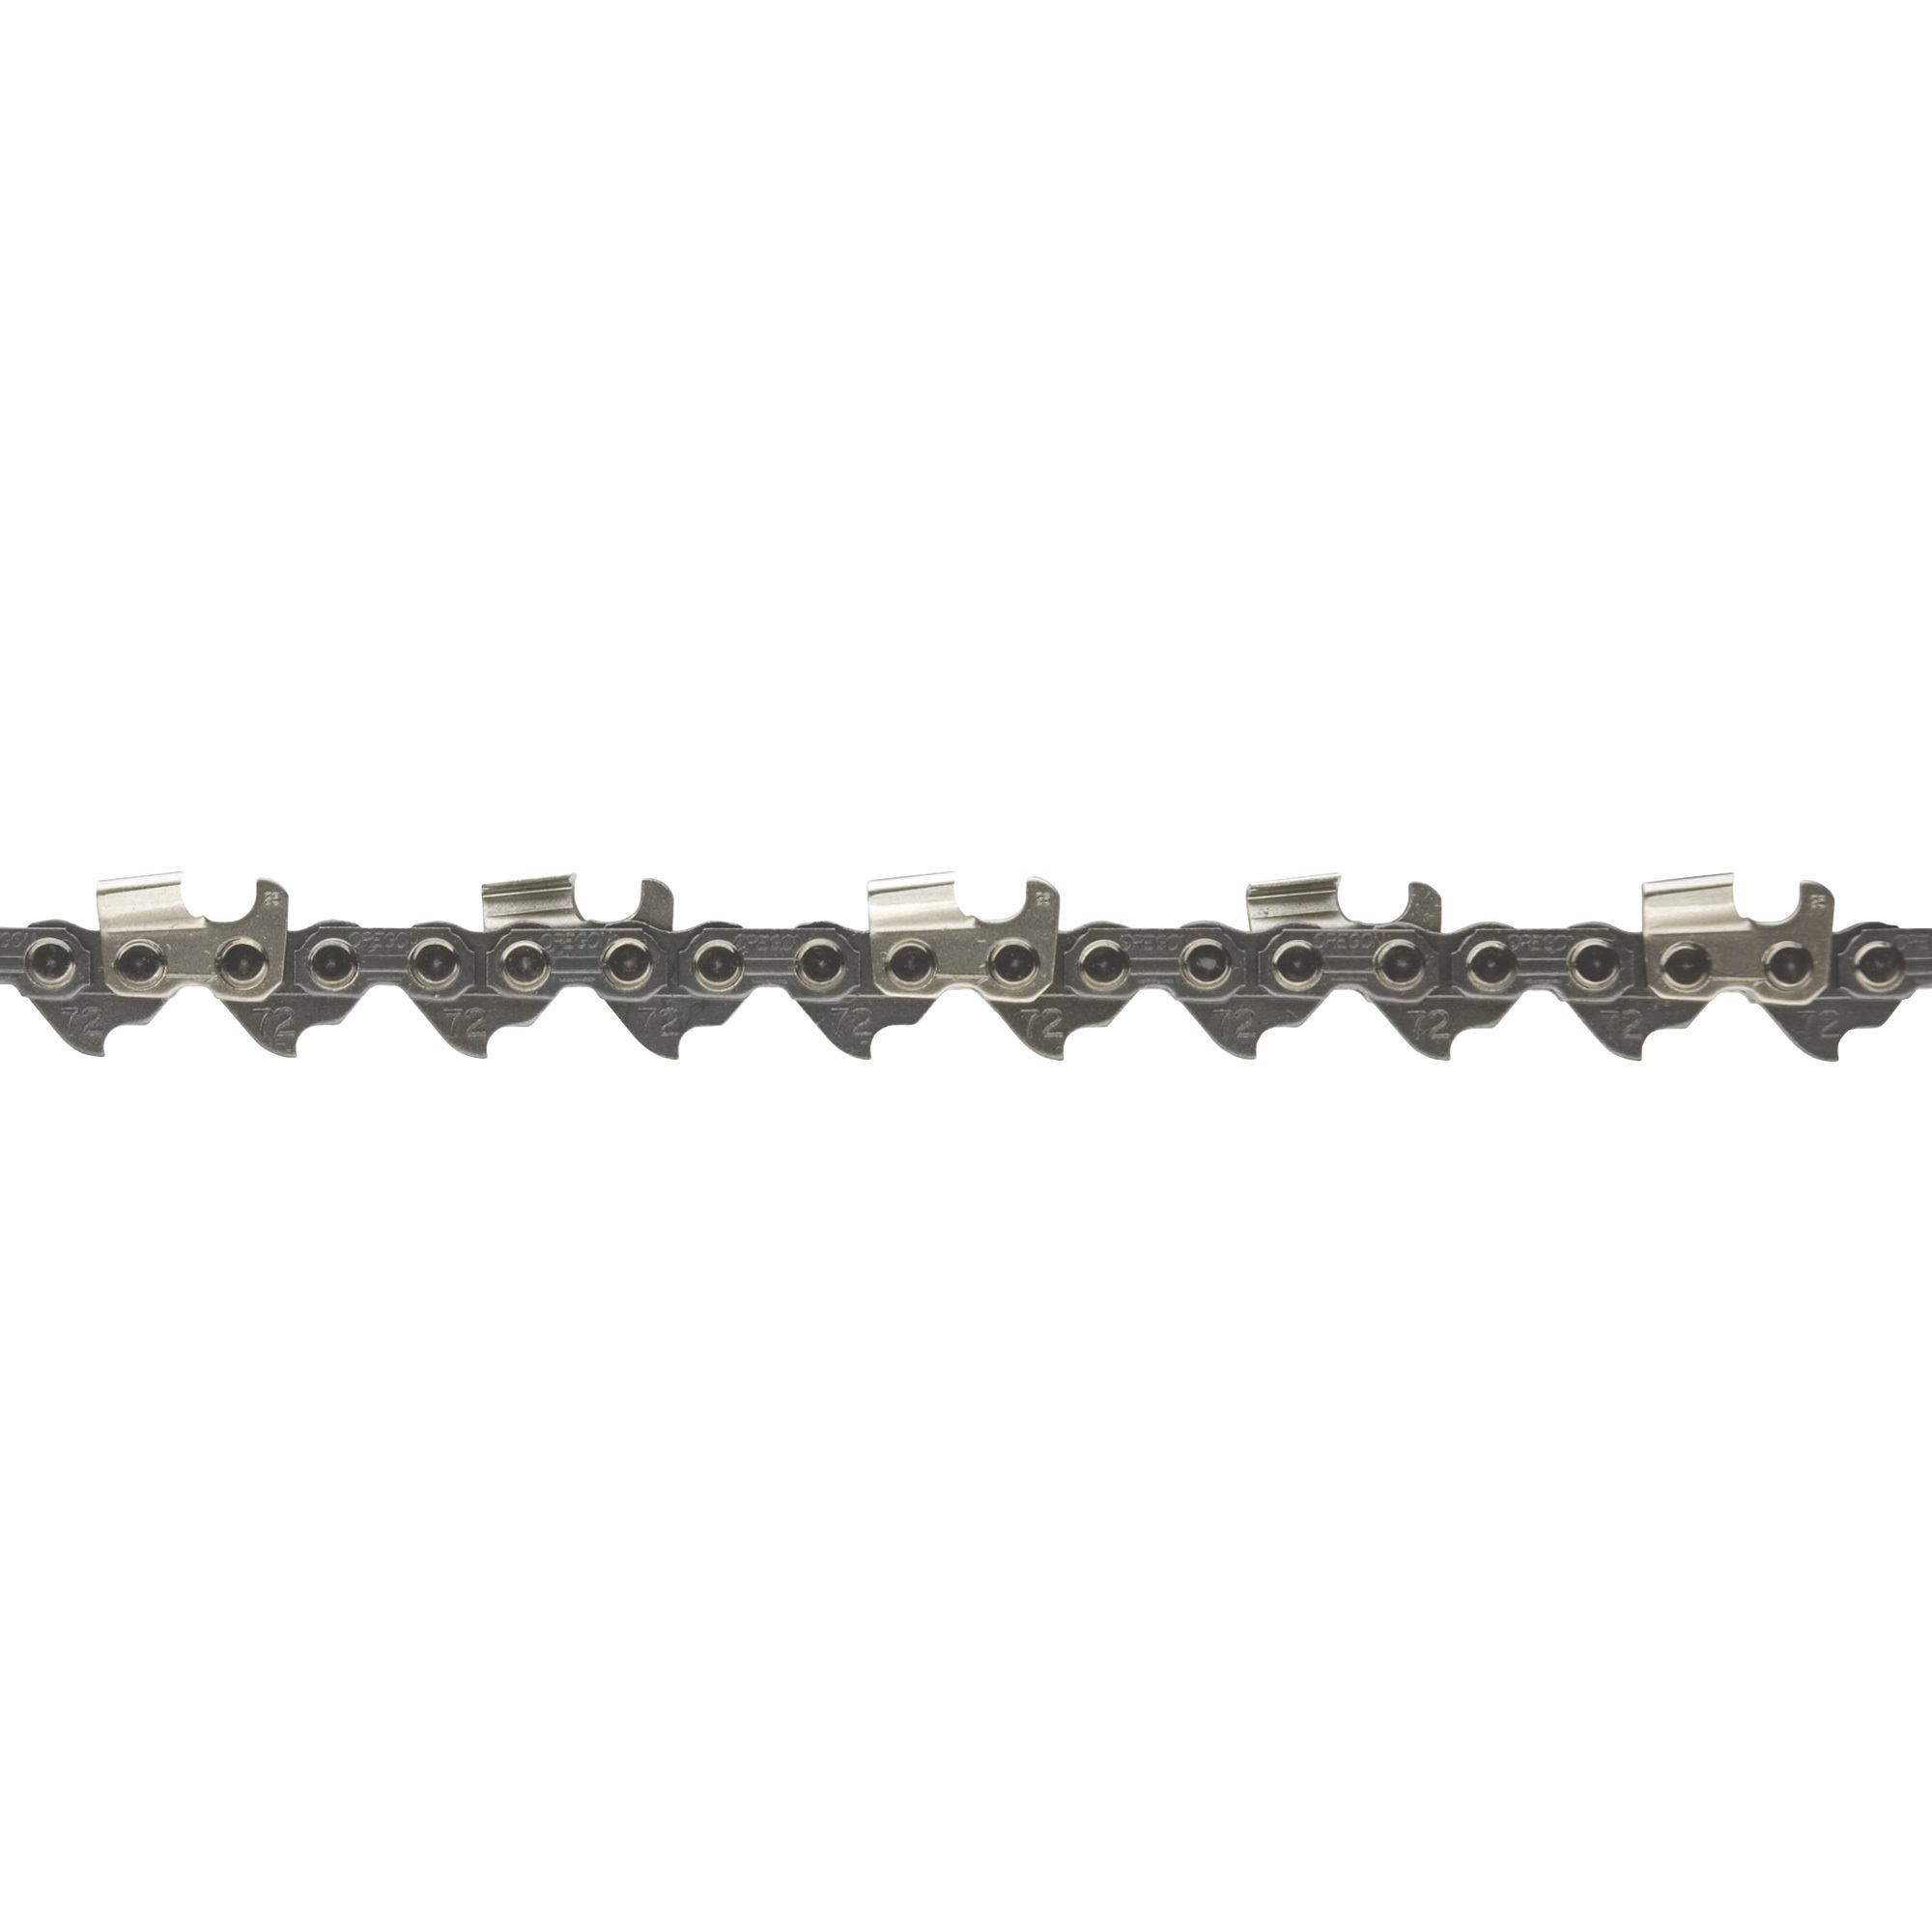 Oregon RipCut Ripping Chain Saw Chain, 3/8Inch Chain Pitch, 0.050 Chain Gauge, 93 Drive Links, Model 72RD093G